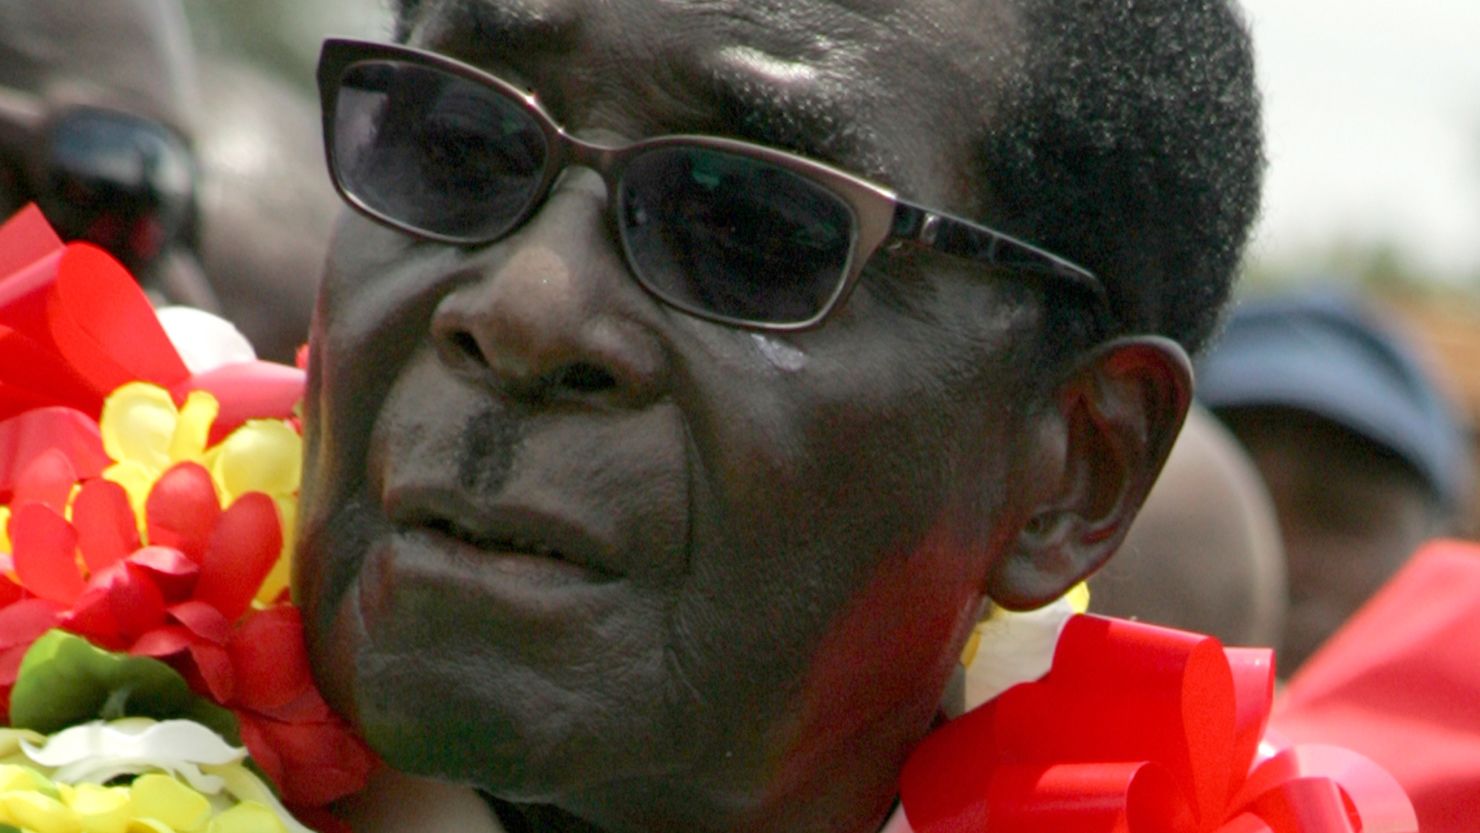 Zimbabwe's President Robert Mugabe wears a garland during a rally held on March 2, 2013 in Bindura,